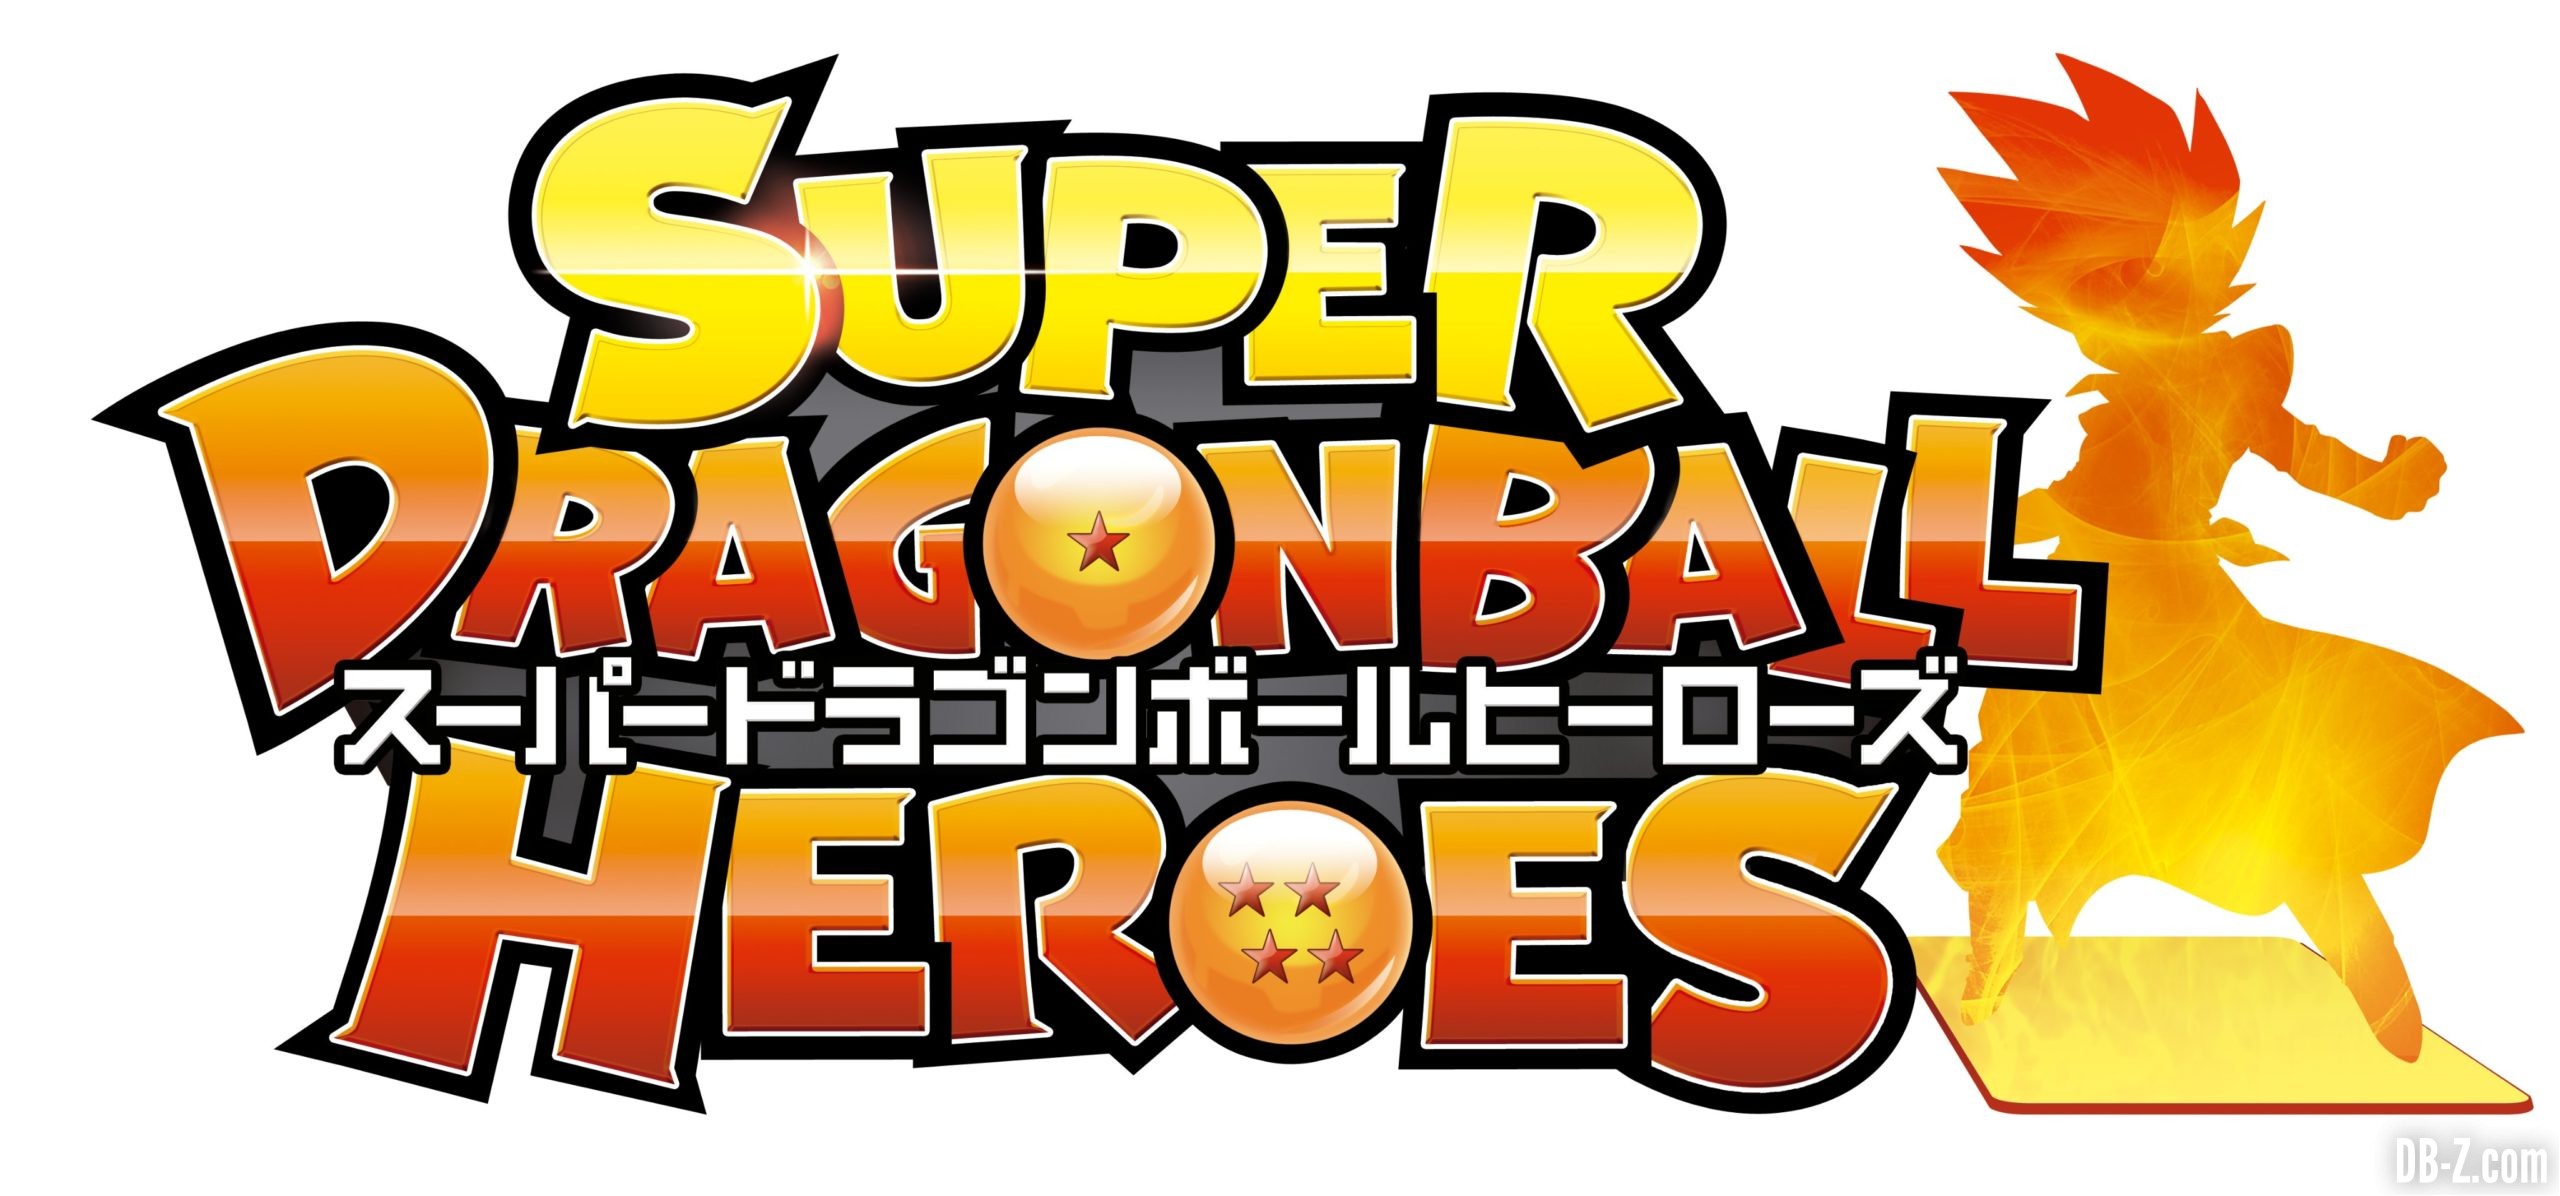 1 MILLIARD de cartes Super Dragon Ball Heroes distribuées en 10 ans  d'existence !